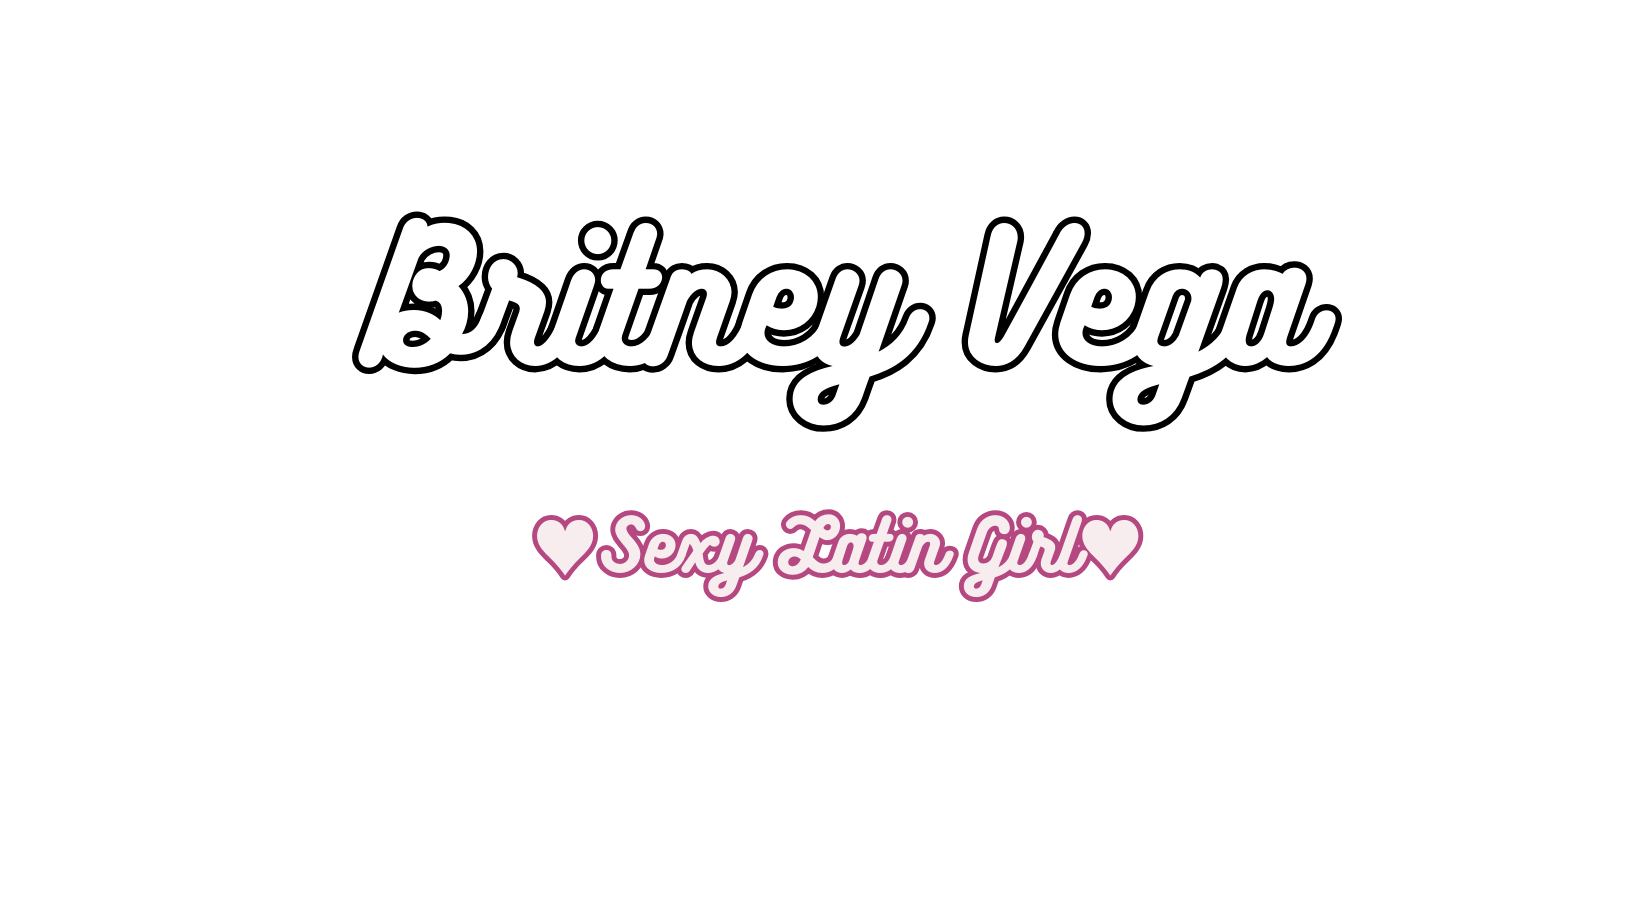 BritneyVega ♥♥ image: 1